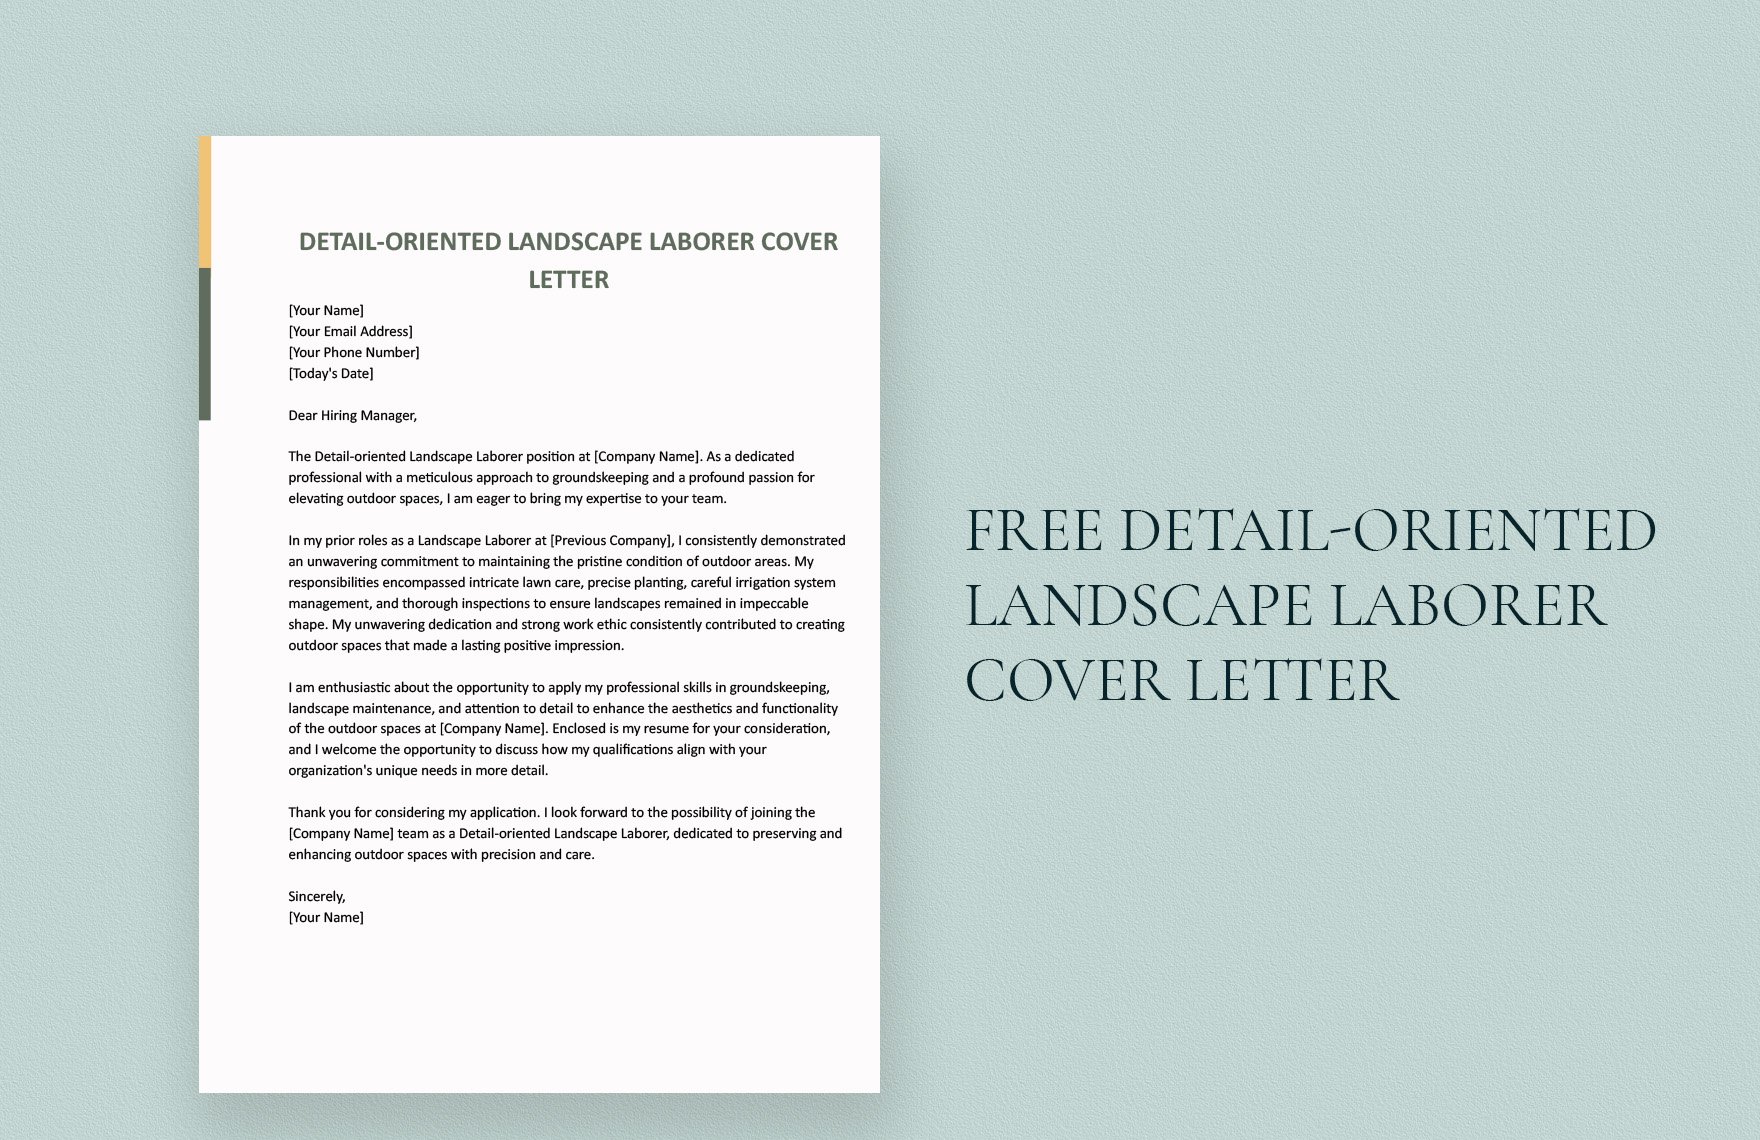 Detail-oriented Landscape Laborer Cover Letter in Word, Google Docs